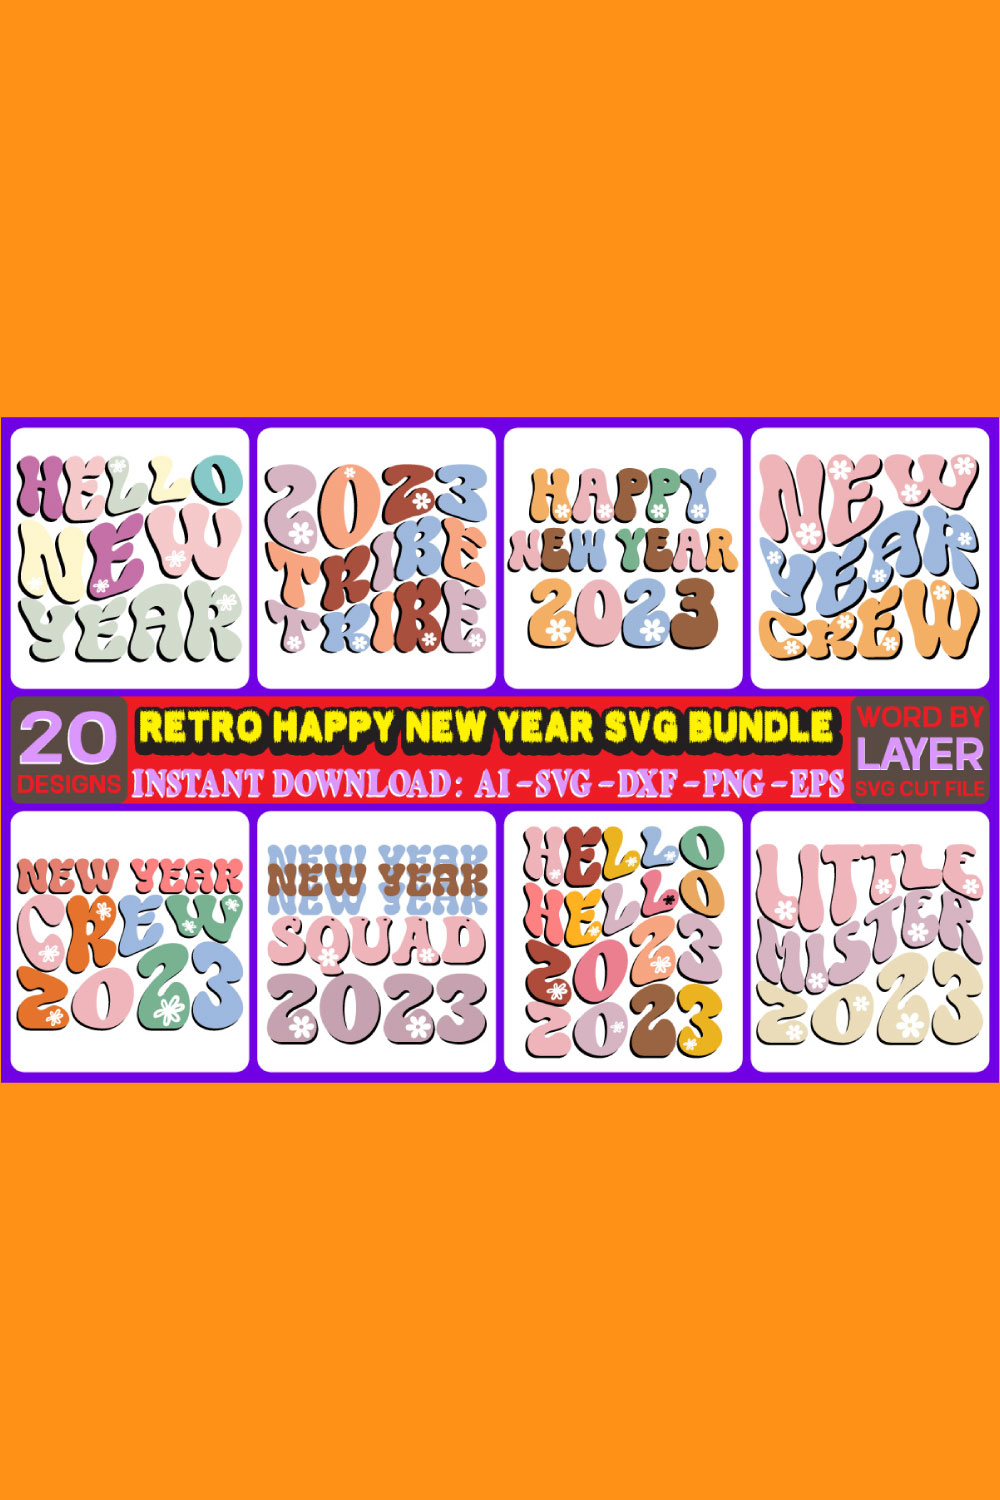 Retro Happy New Year SVG Bundle pinterest image.